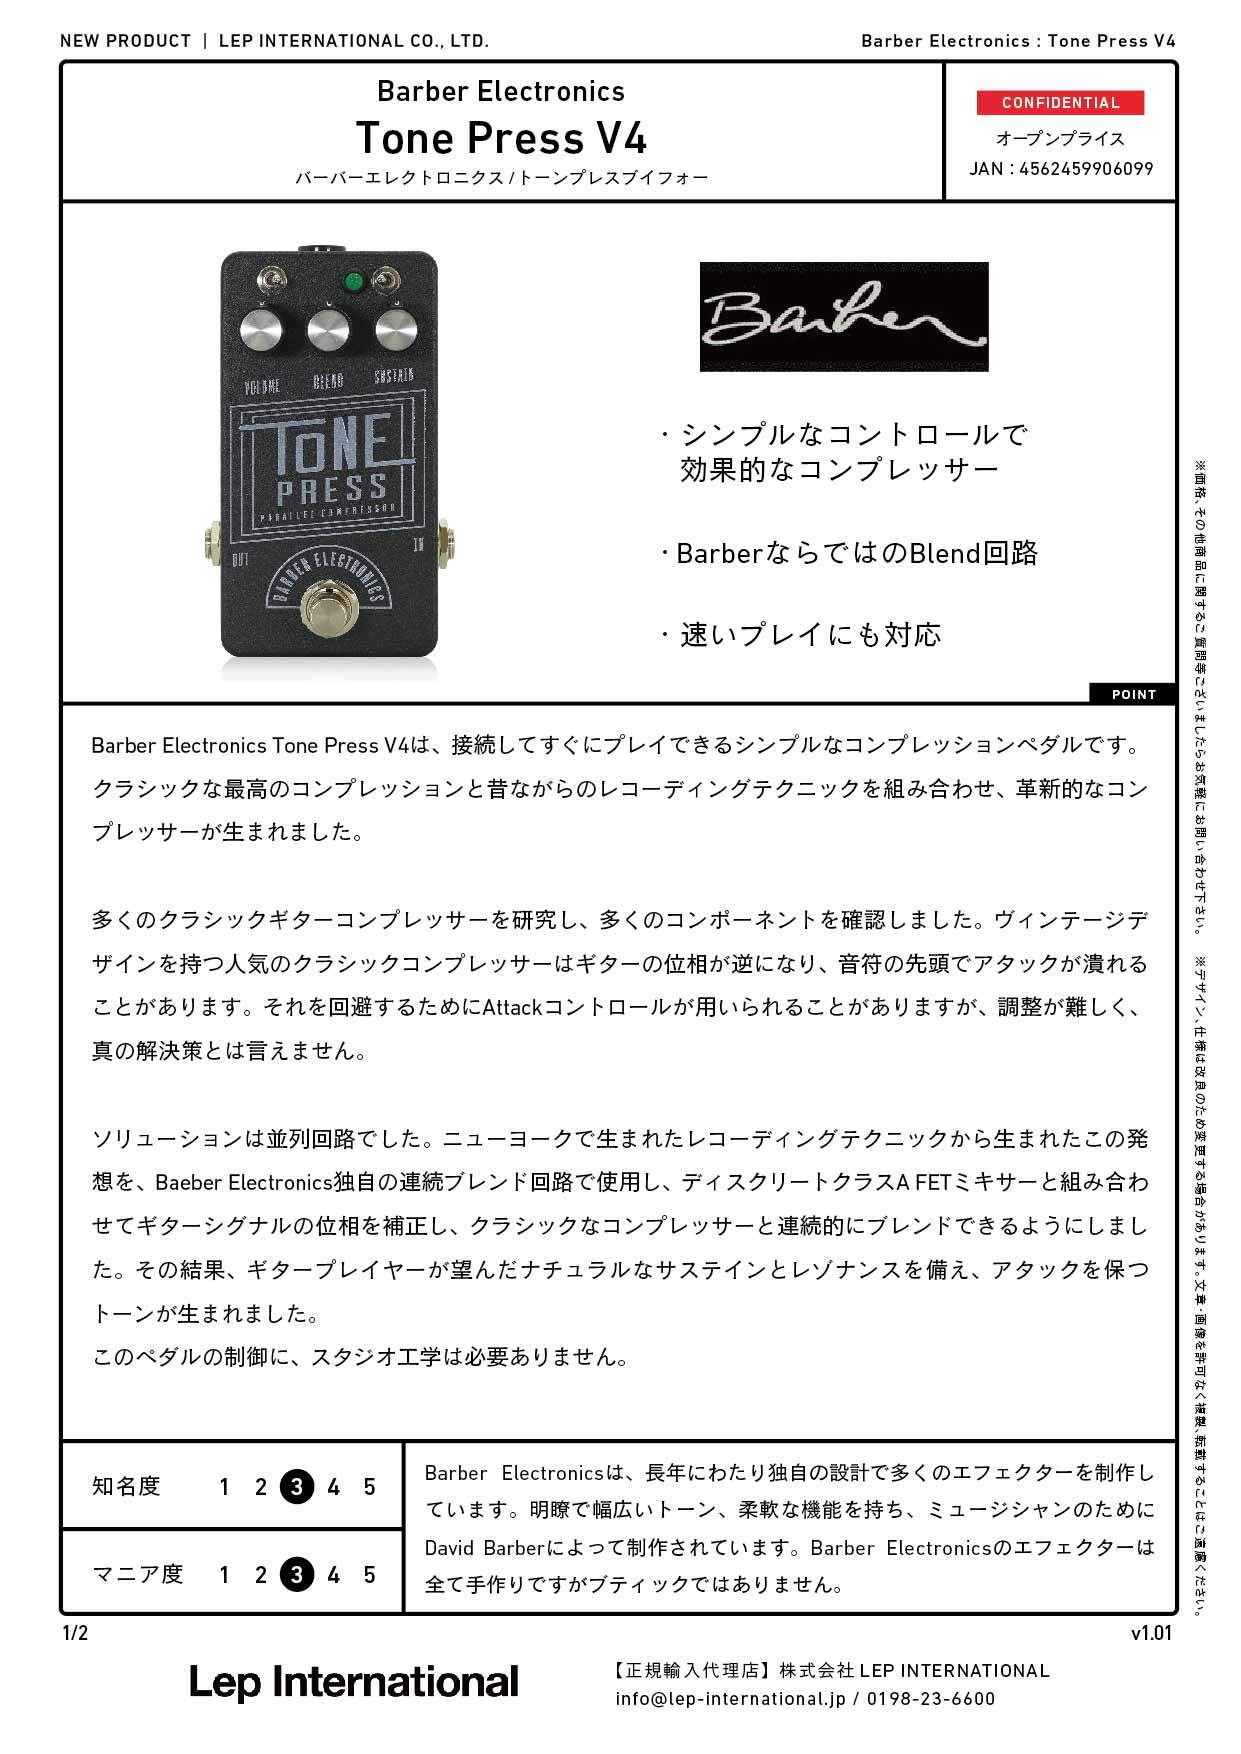 Barber Electronics/Tone Press V4 Black